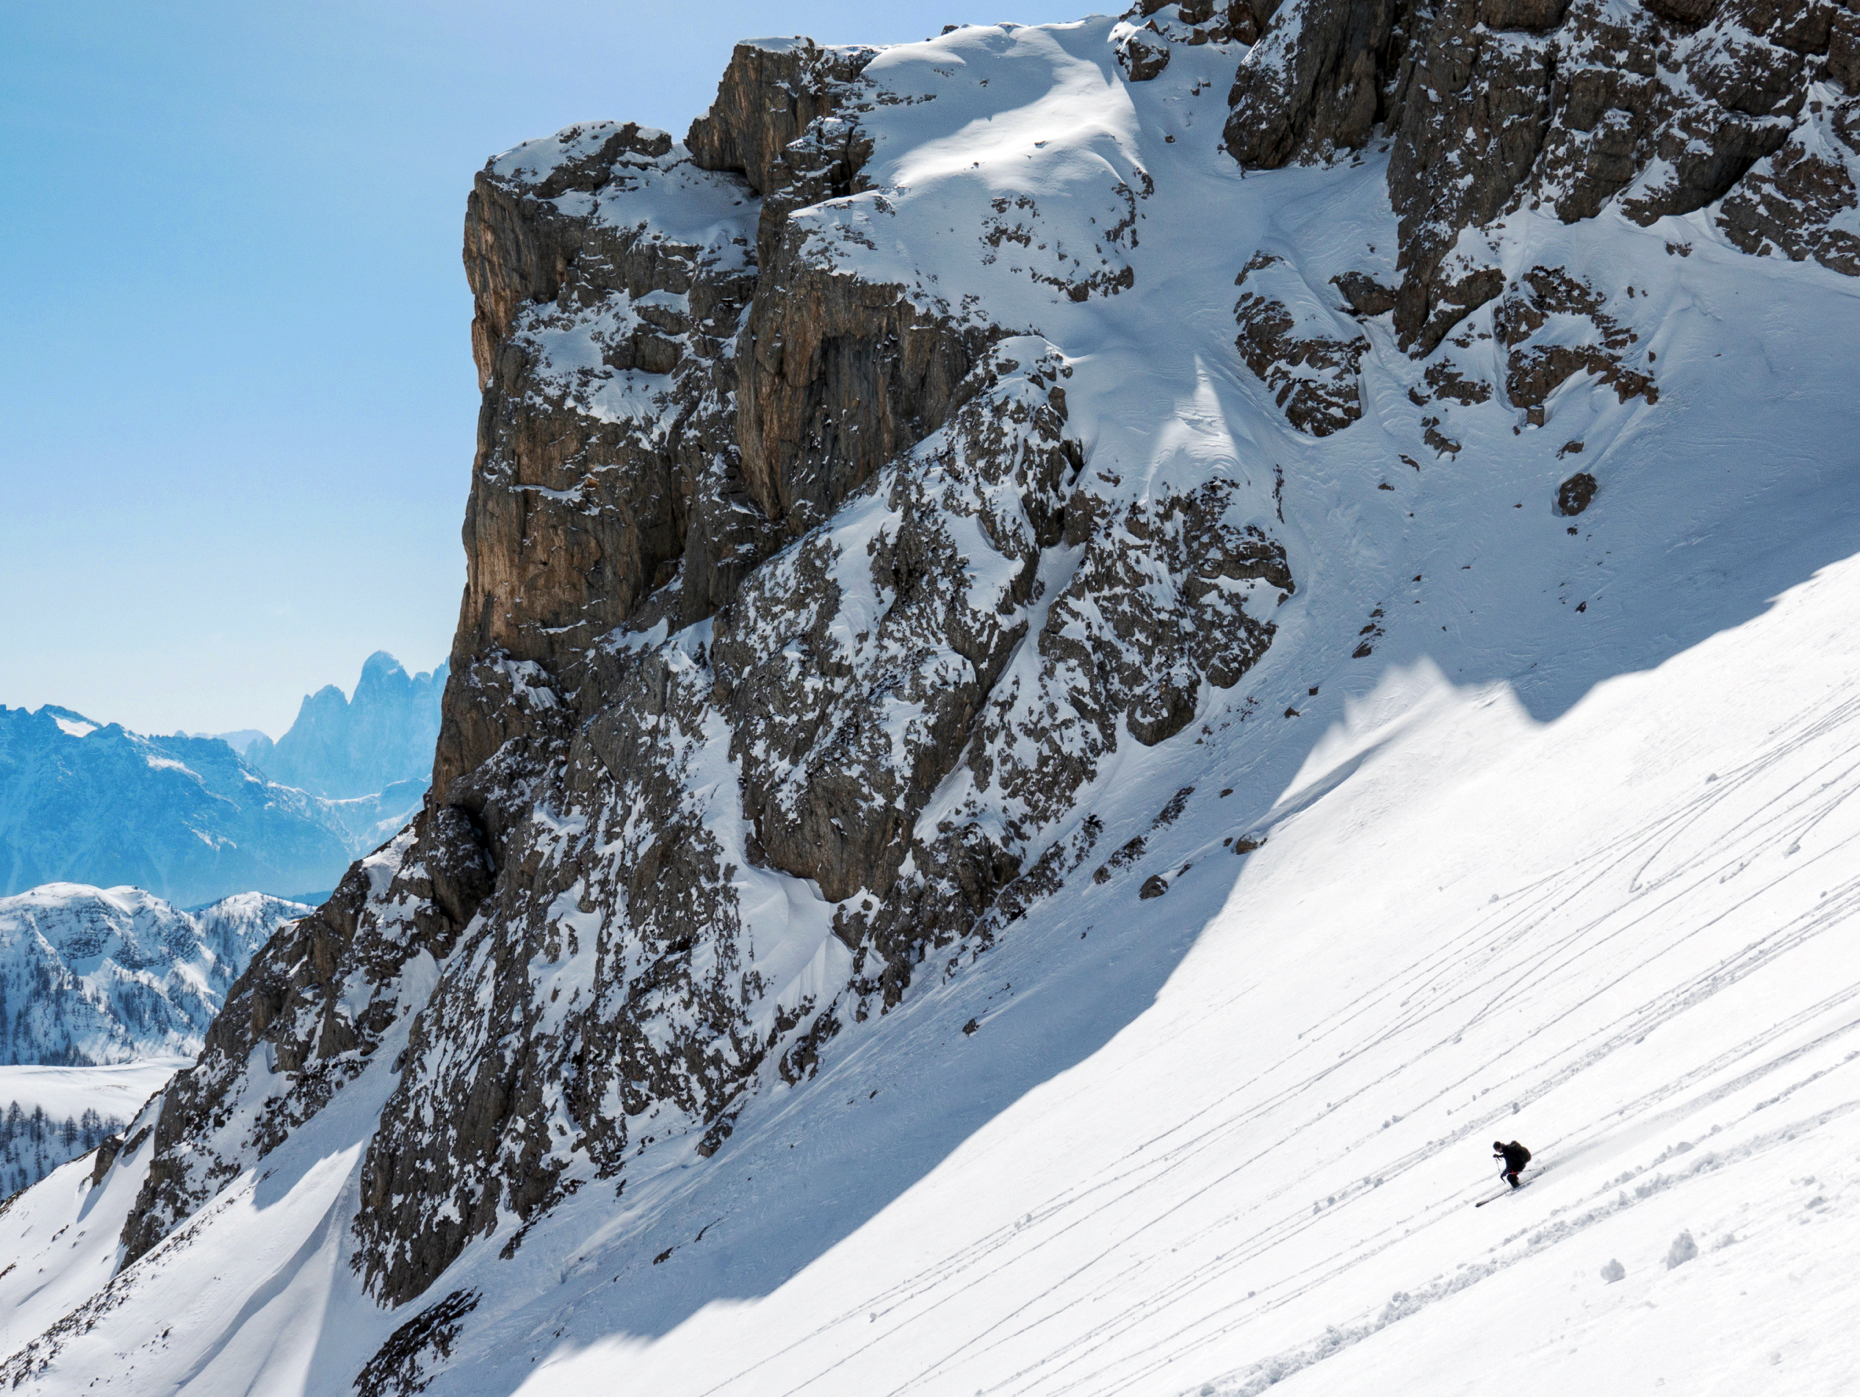 Backcountry skiers near the Rifugio Fuciade, Pale di San Martino, Dolomite Mountains, Alps, Italy